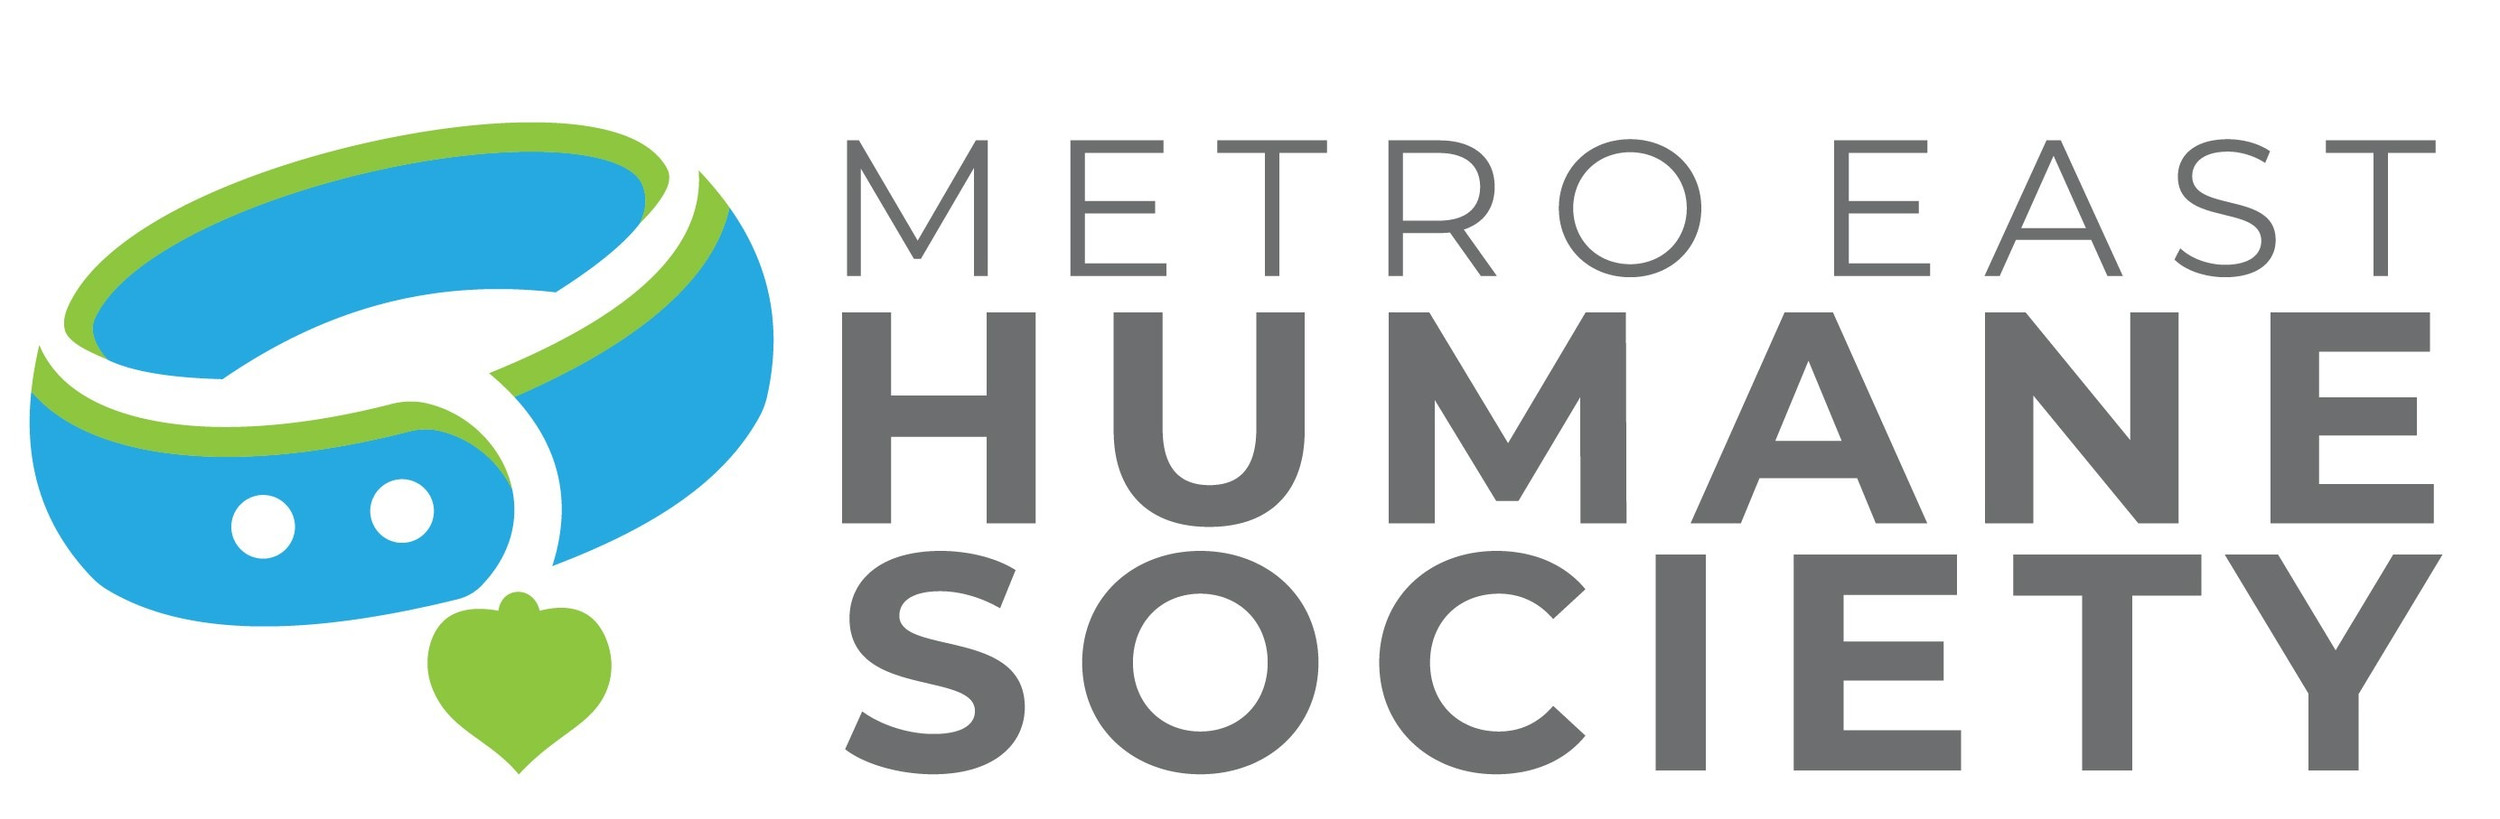 Metro East Human Society